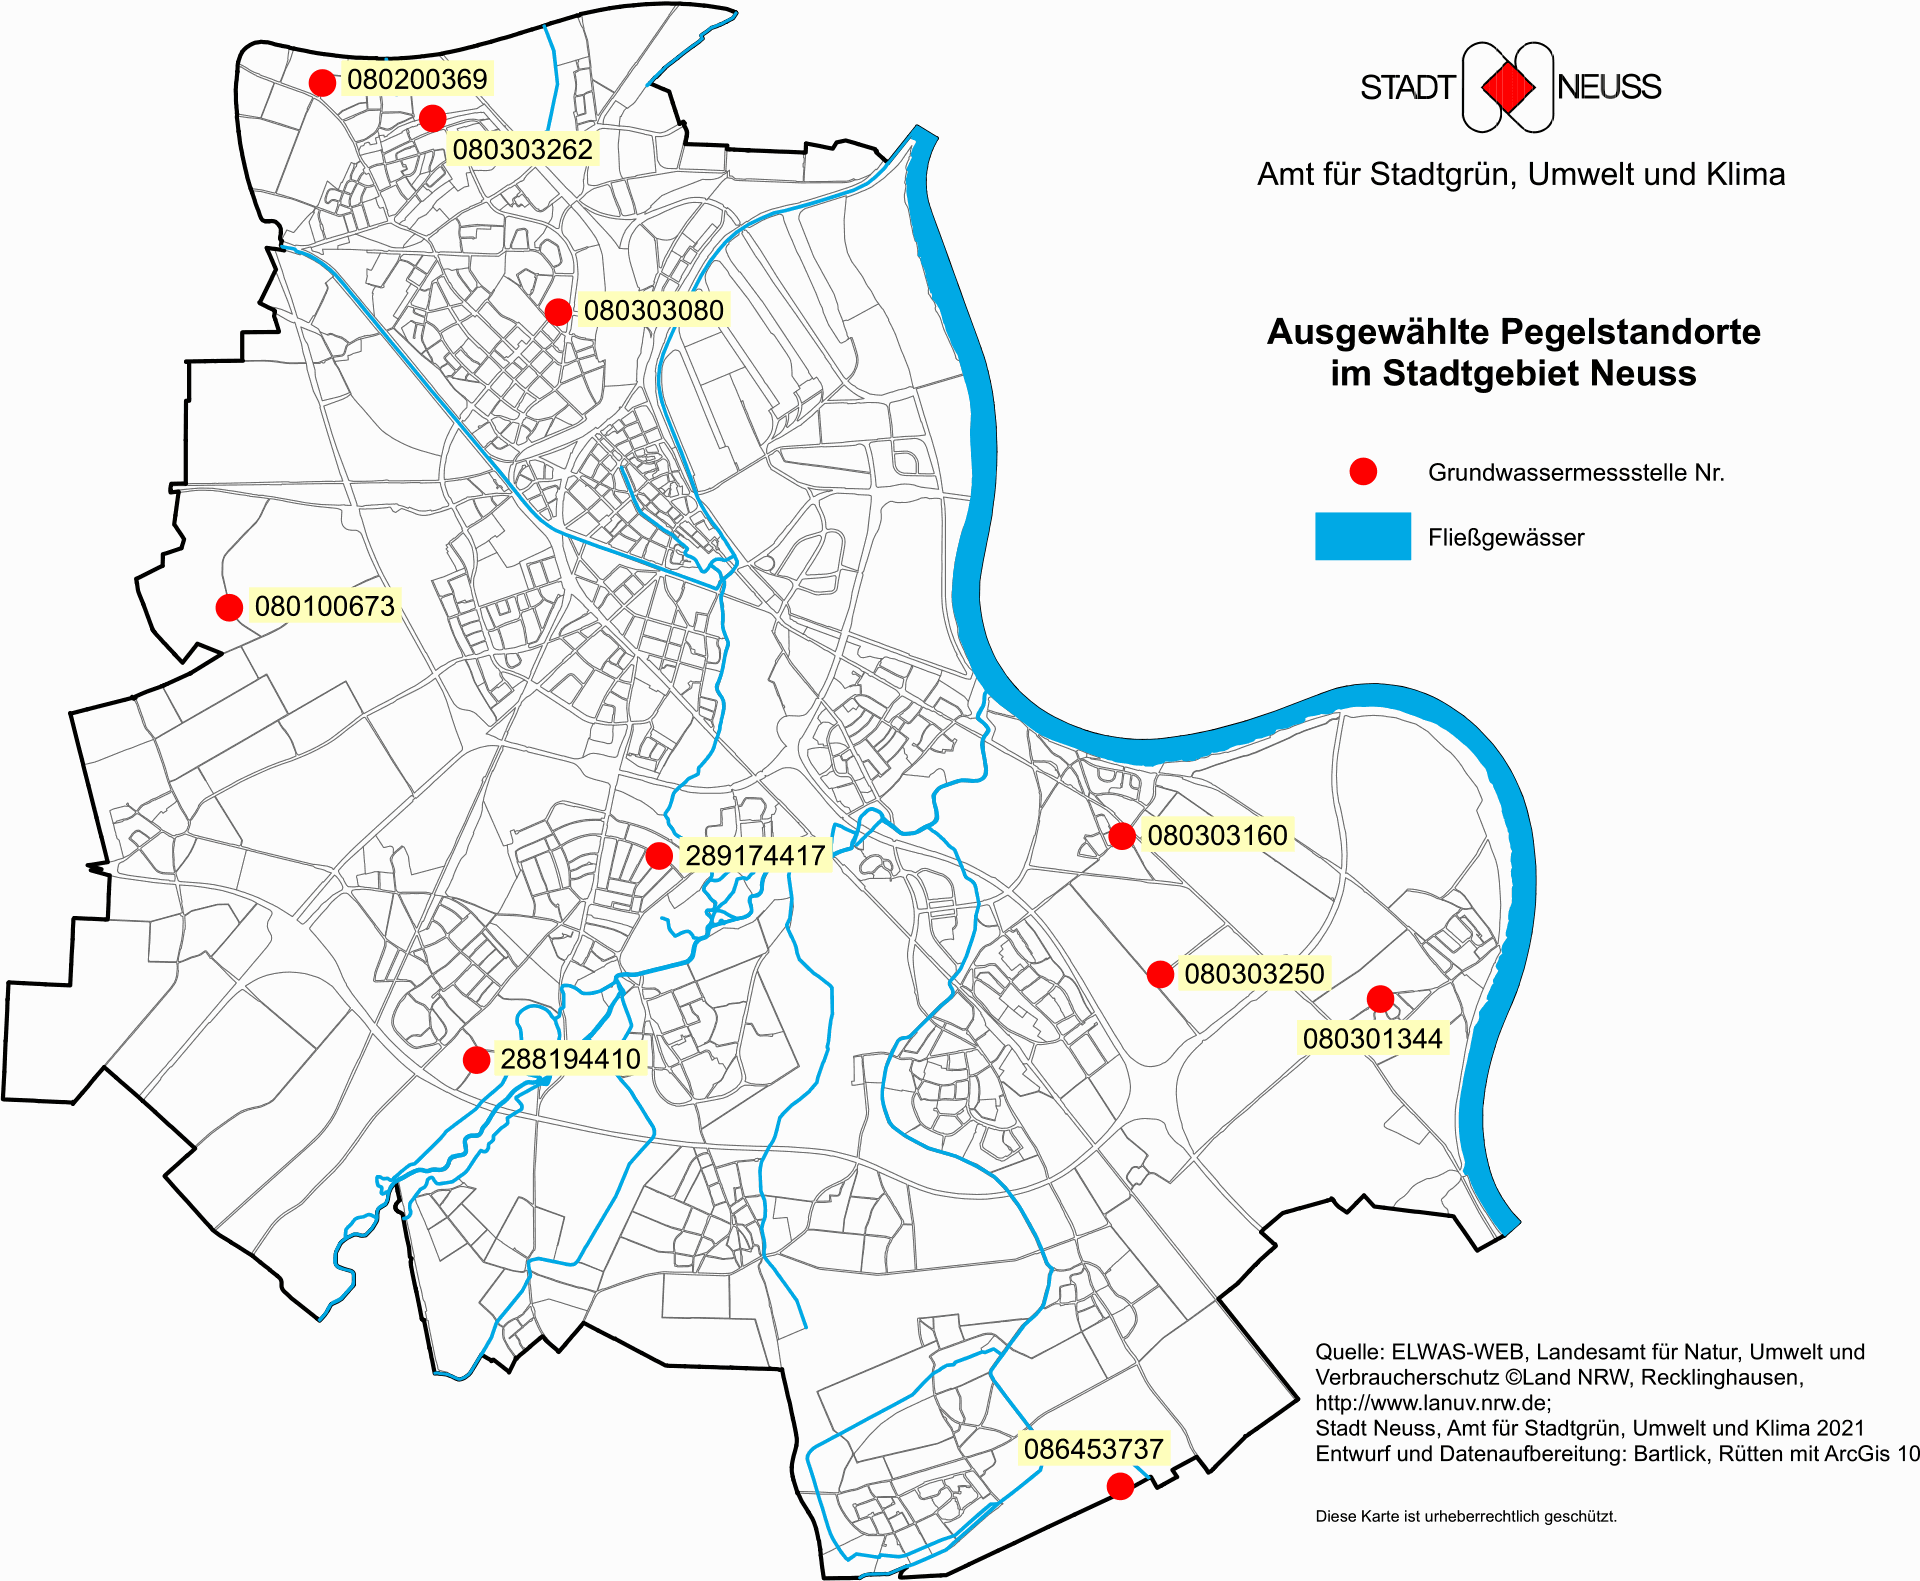 Karte der Pegelstandorte im Stadtgebiet Neuss 2022